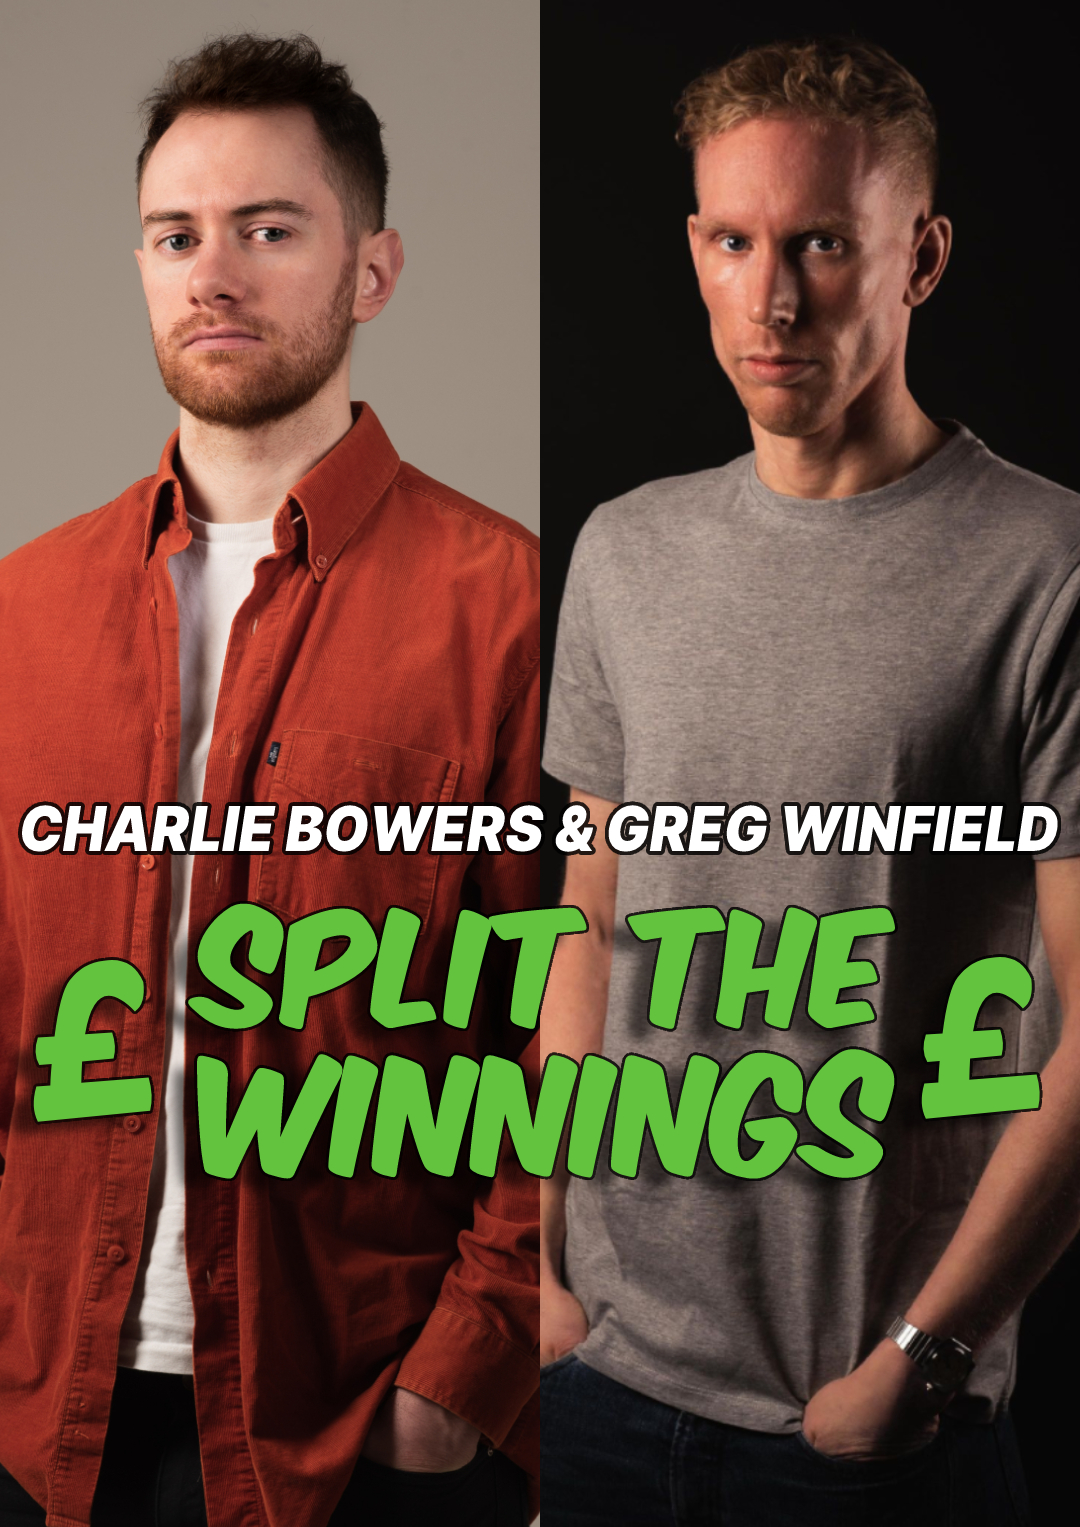 Charlie Bowers & Greg Winfield Brighton Fringe 2022 Event Image